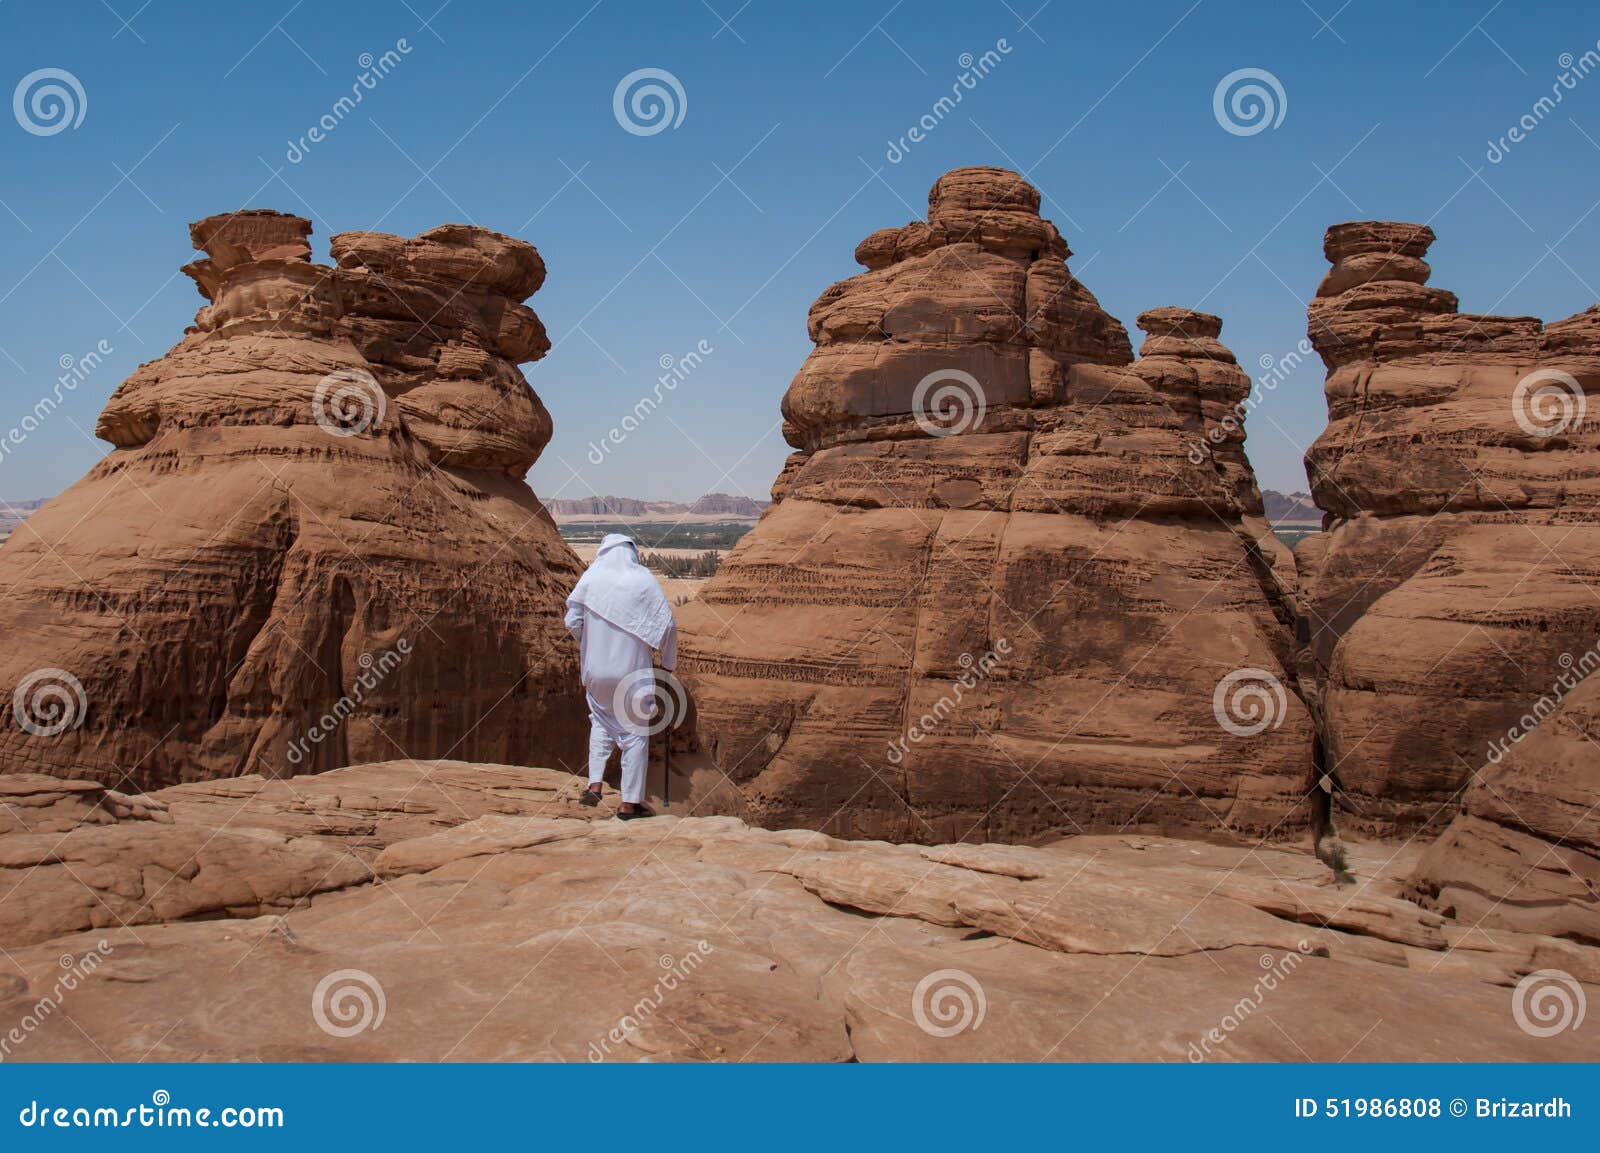 saudian walking on top of rock formations, saudi arabia